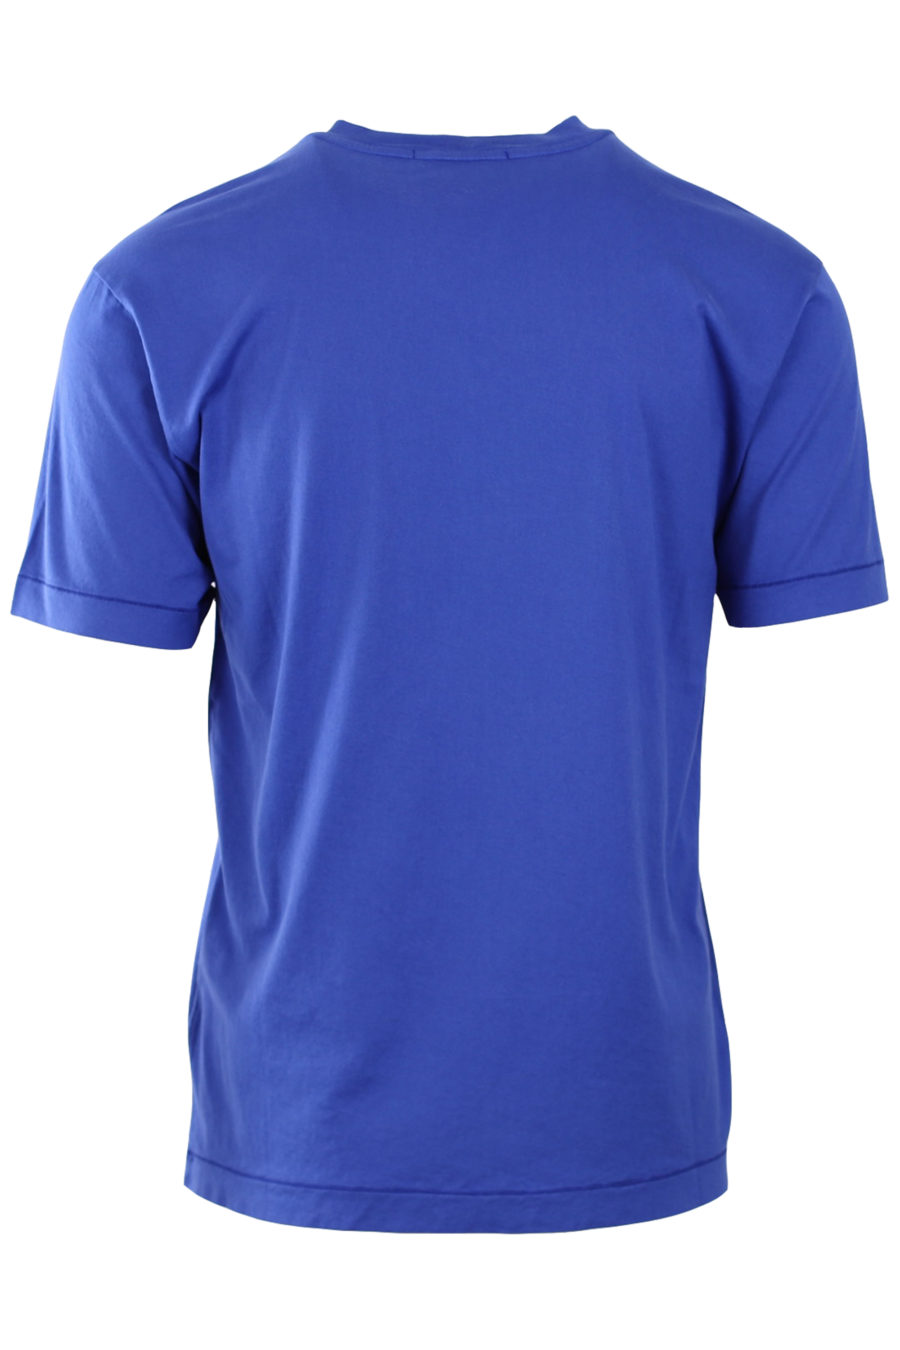 T-shirt azul com emblema da marca - dcc775abd52becea25ae950542b09c8b7834d75f